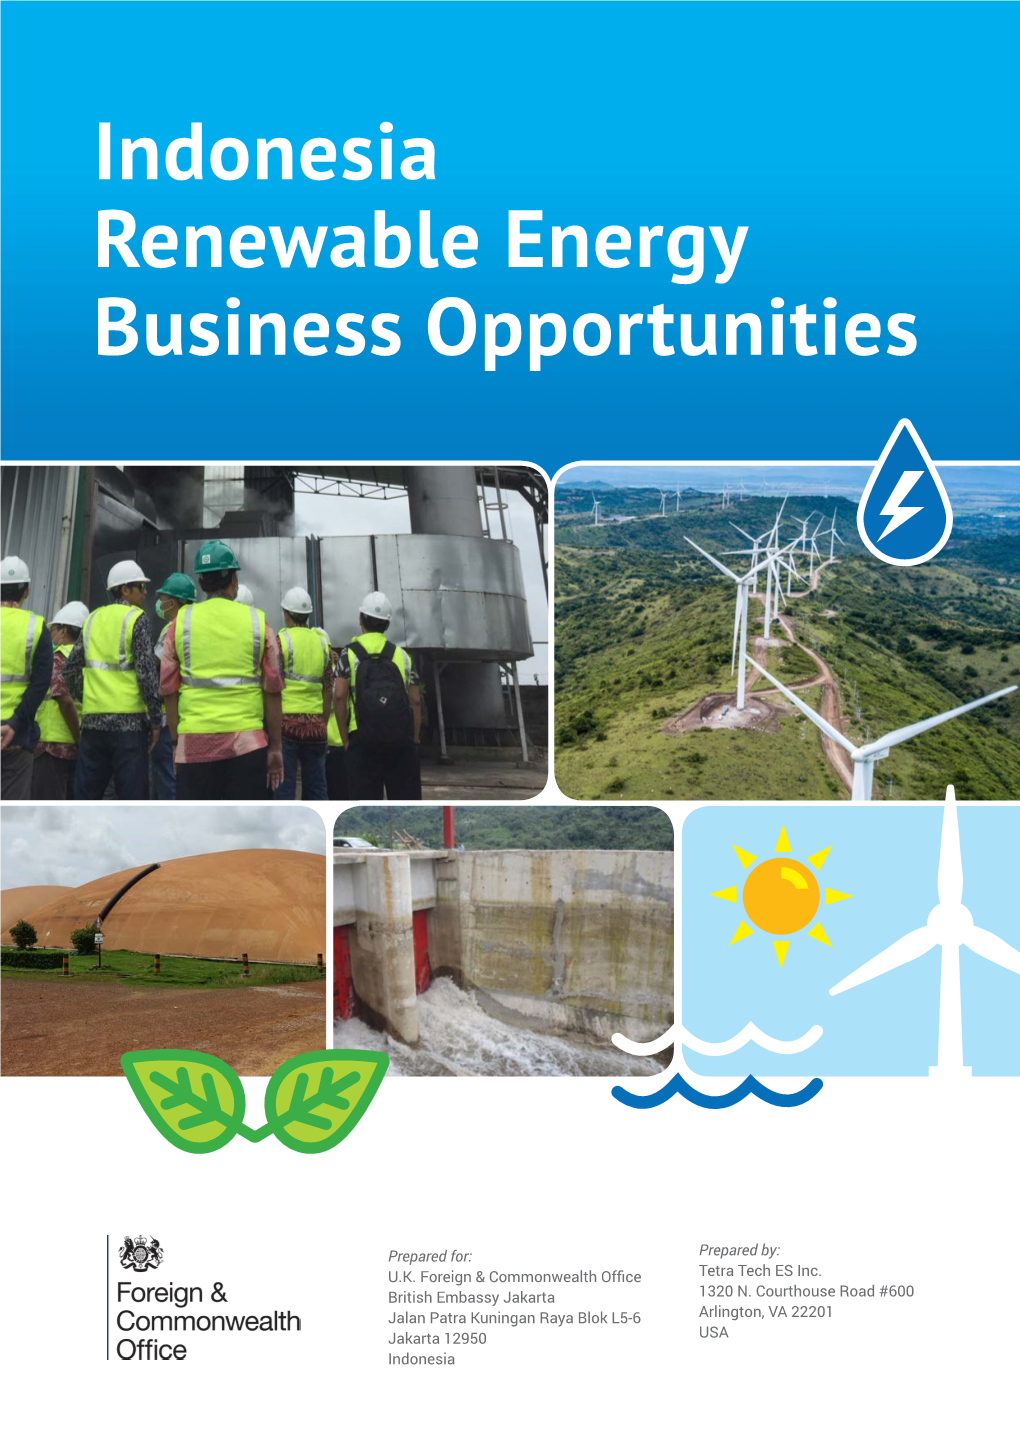 Indonesia Renewable Energy Business Opportunities